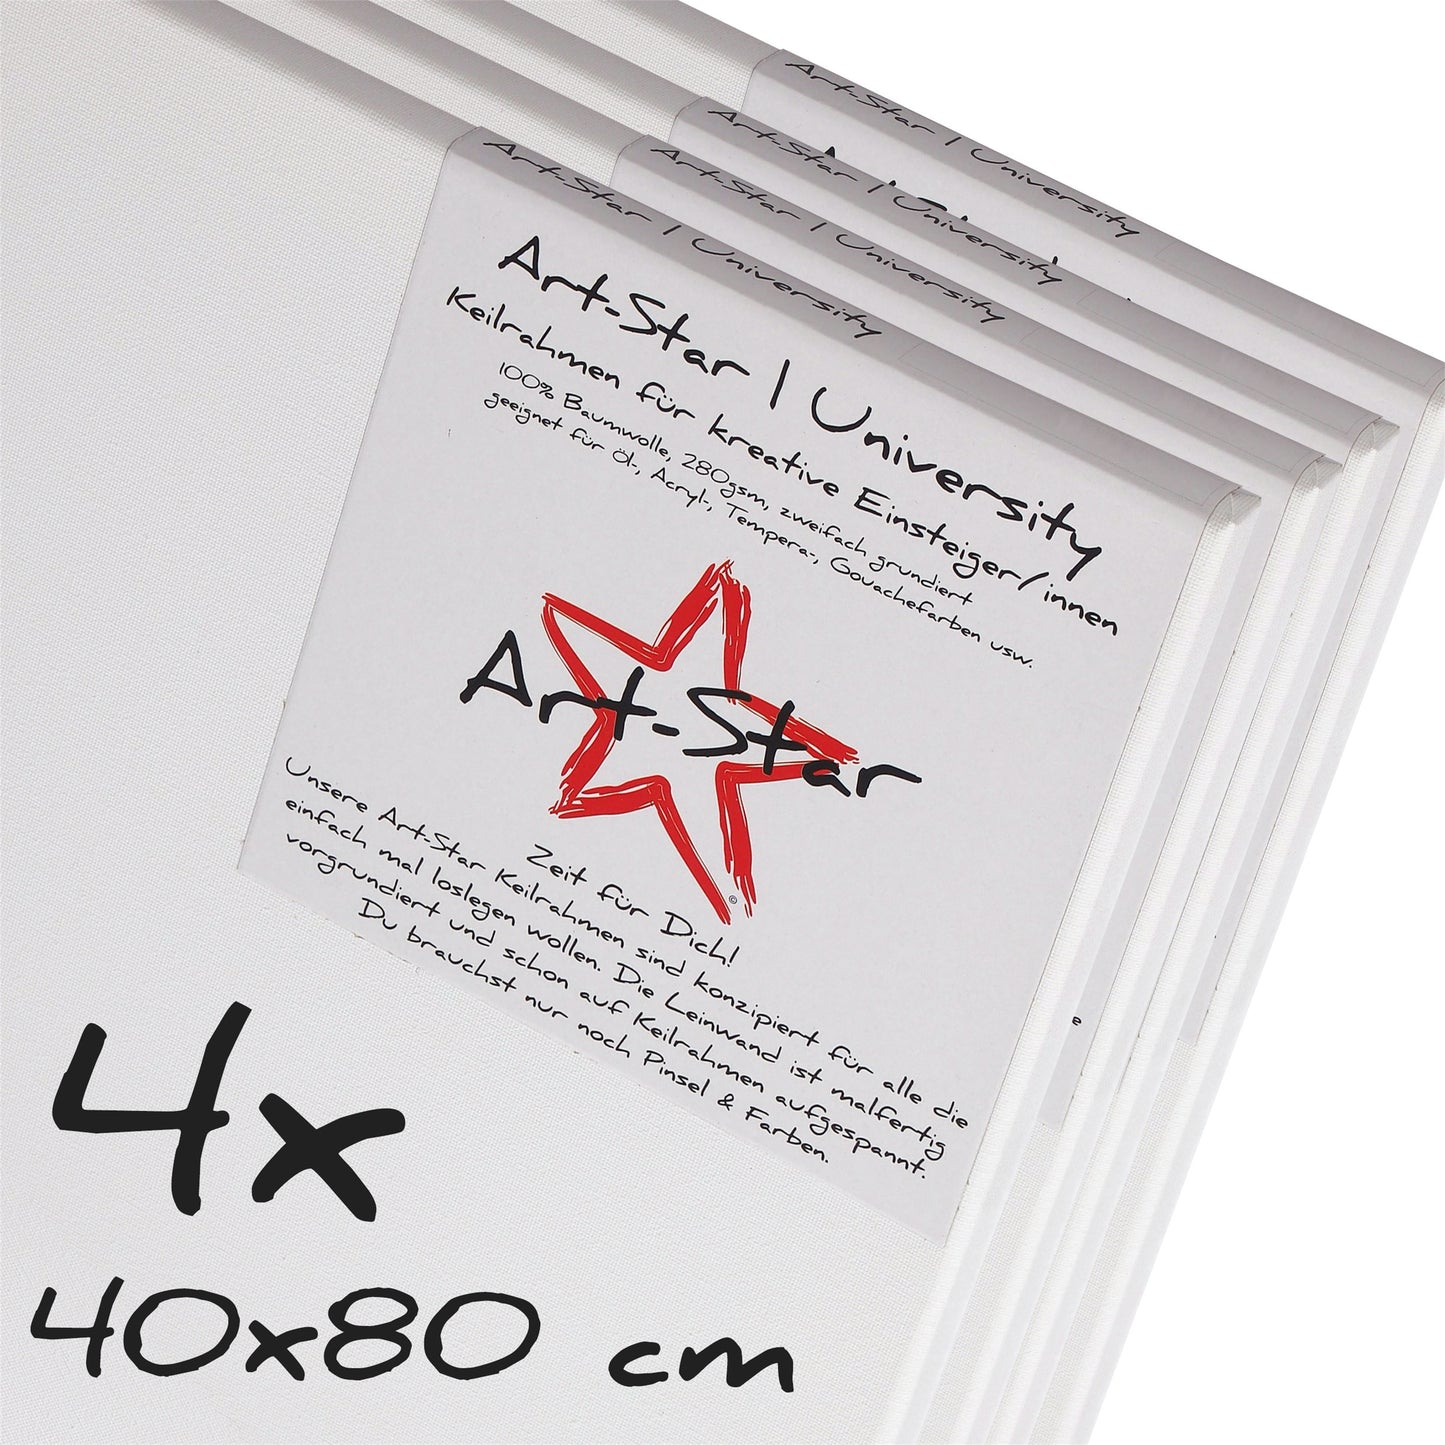 4x ART-STAR LEINWAND | 40x80 cm, 100% Baumwolle | auf Keilrahmen